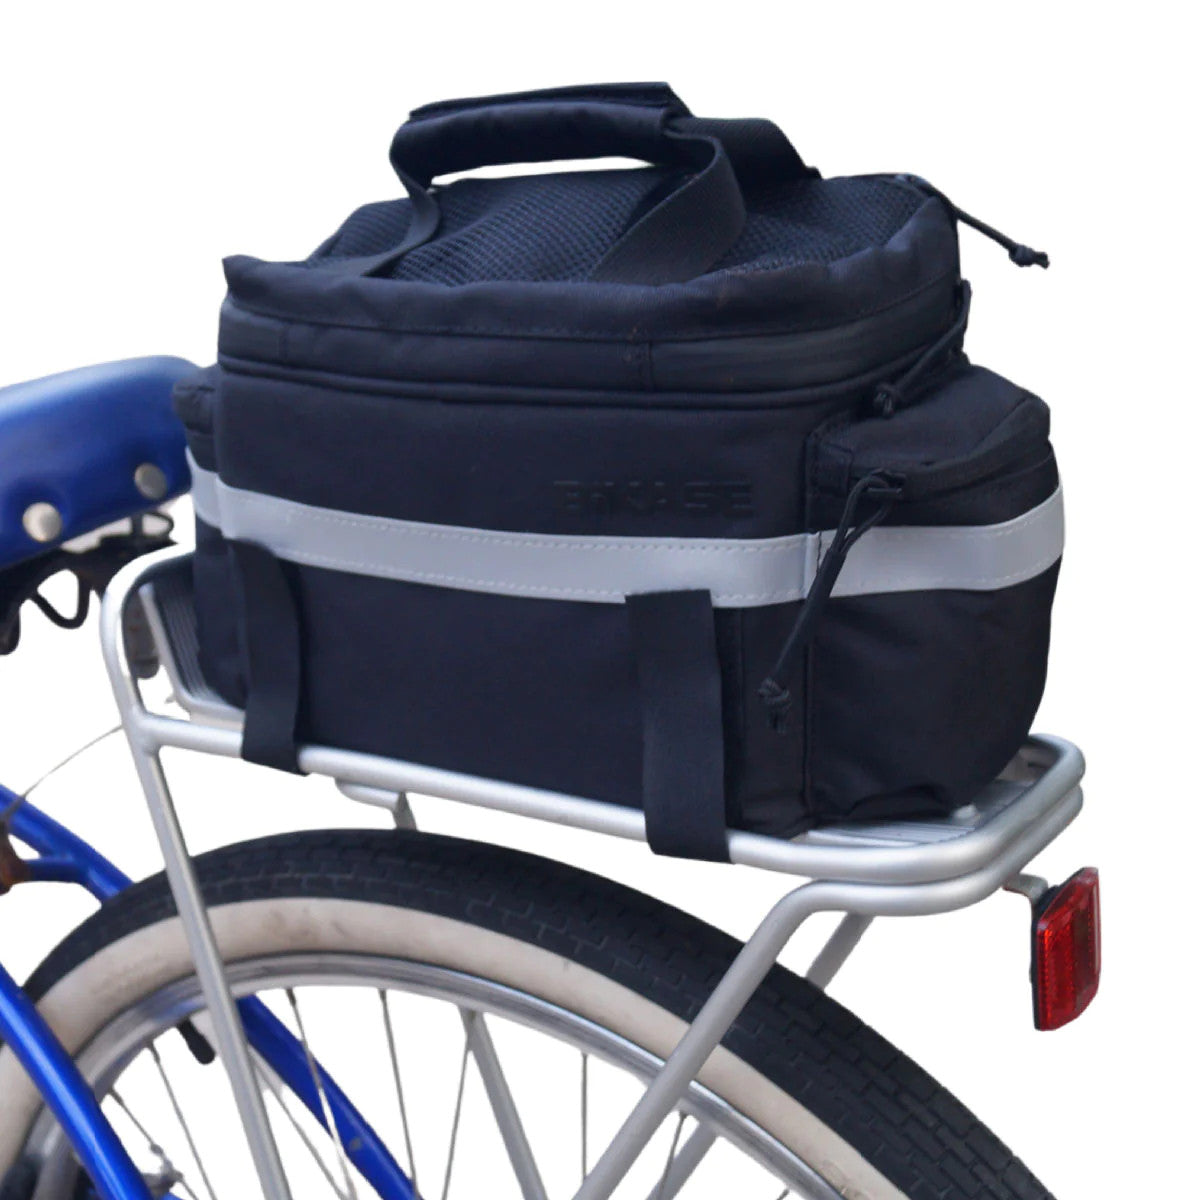 BiKase Koolpak Insulated Bike Trunk or Handlebar Bag - The Bikesmiths